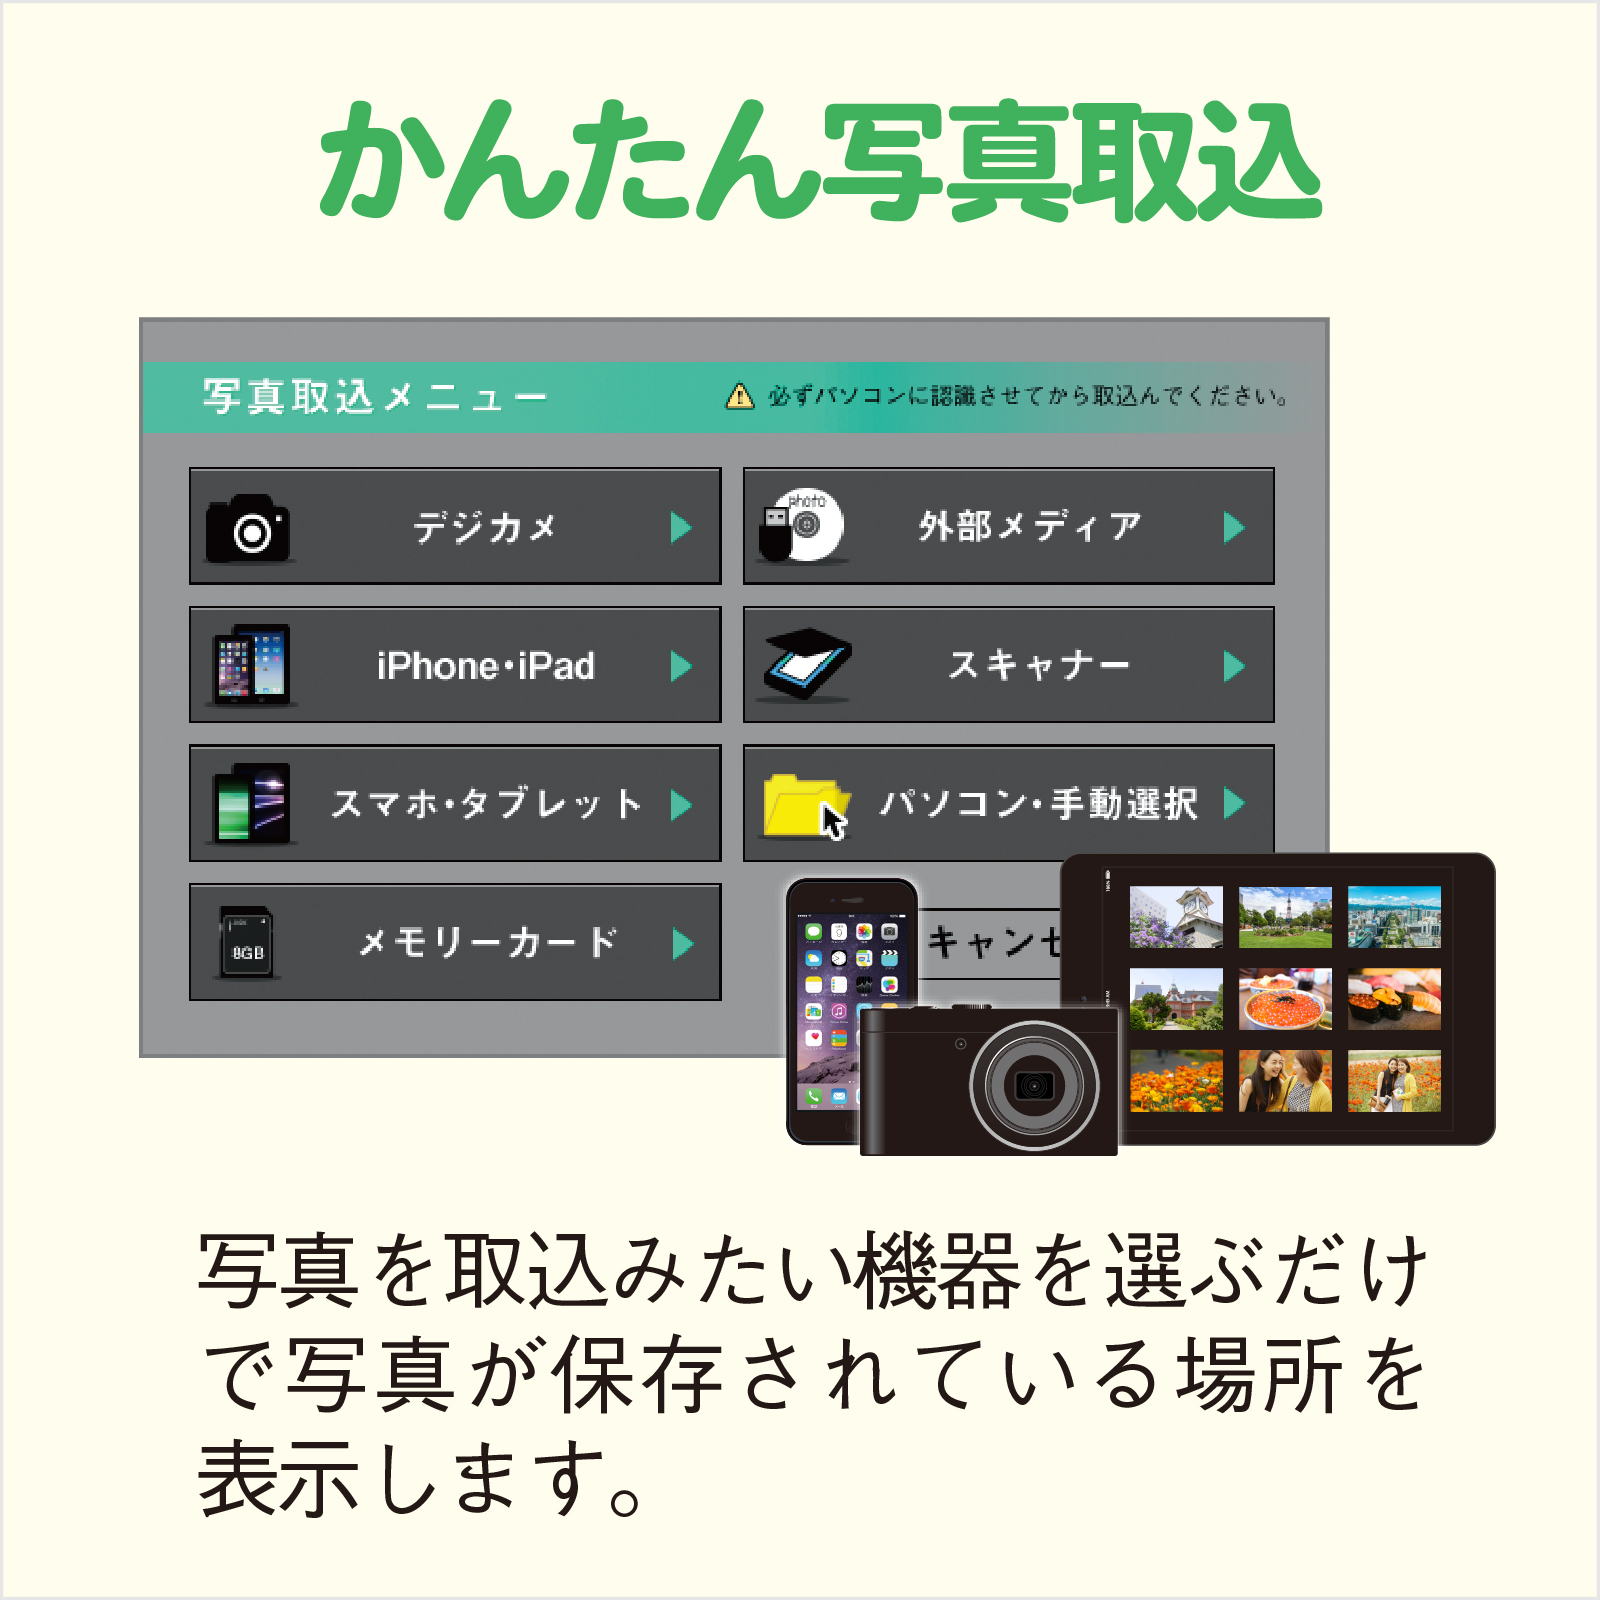  digital camera * smartphone photograph control ECO package version 